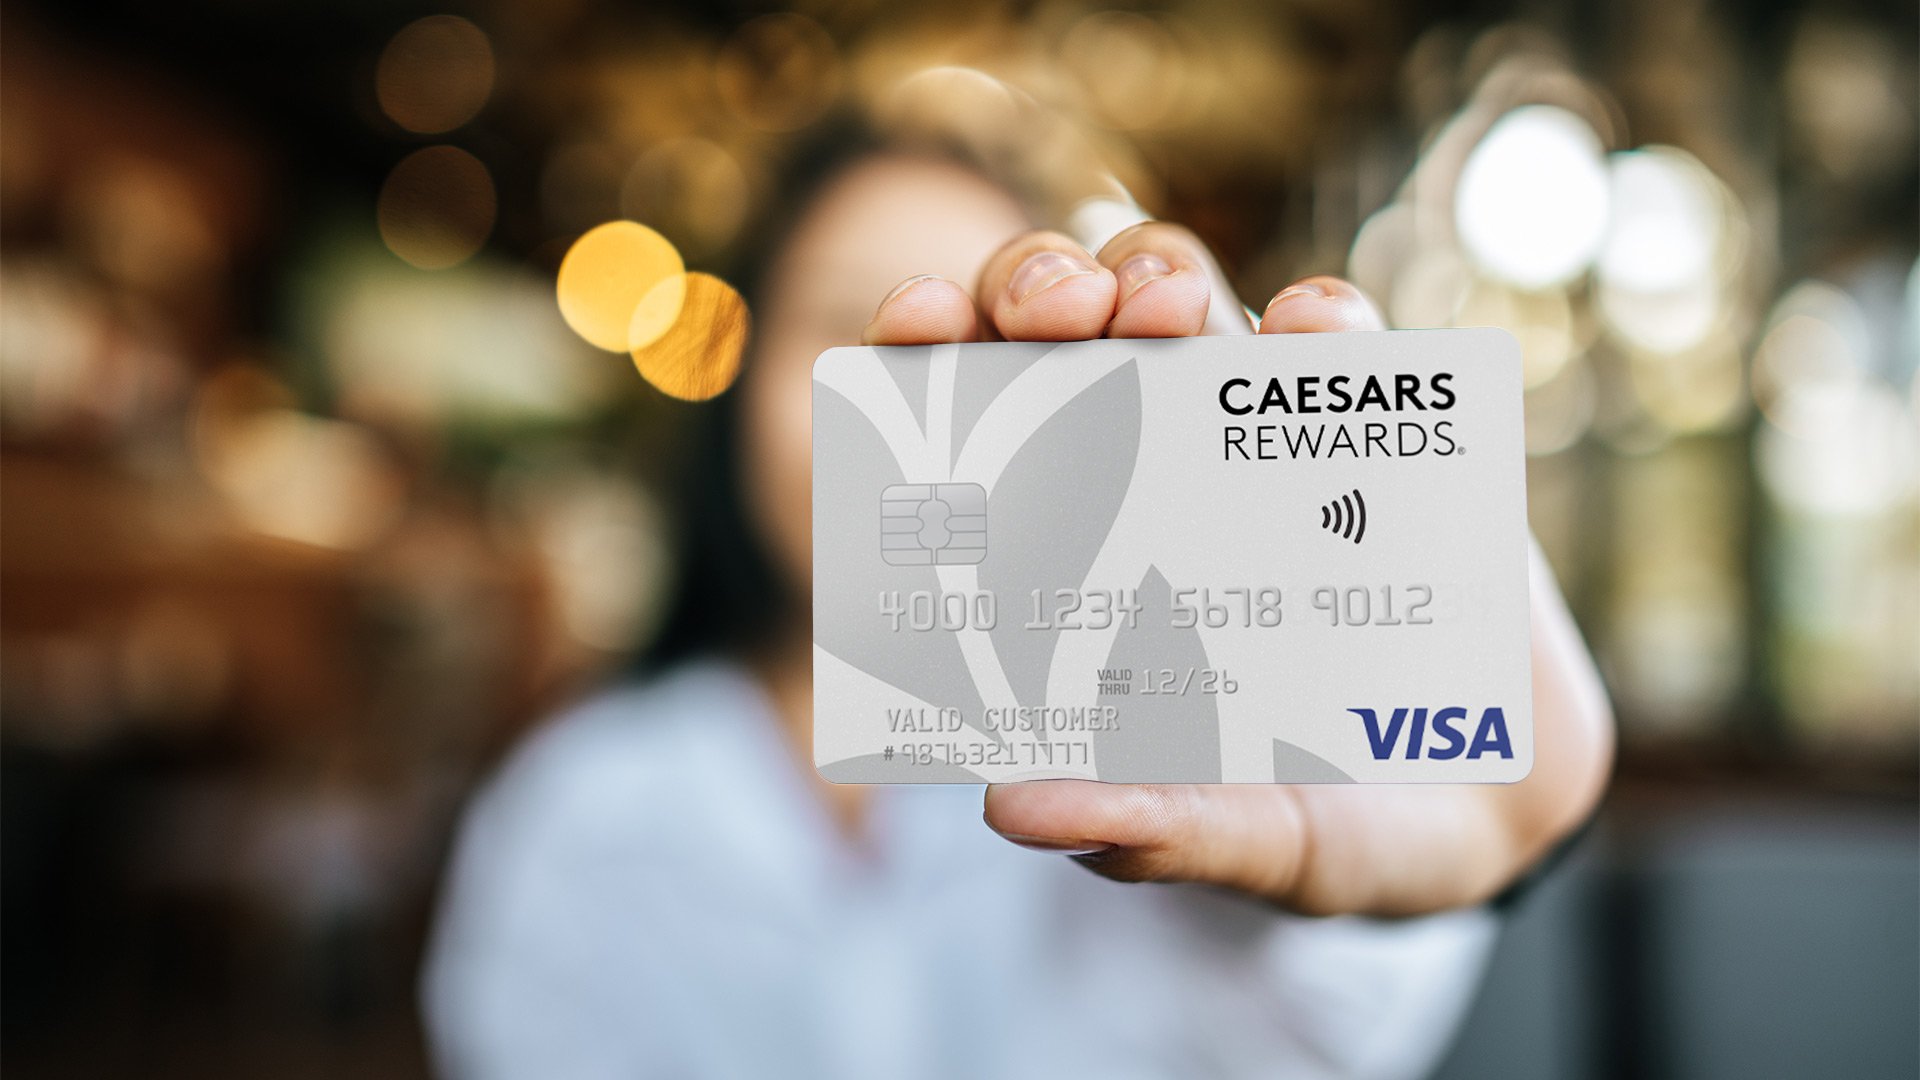 Caesars expands loyalty program to add Tier Credits that raise members'  status via Visa card purchases | Yogonet International